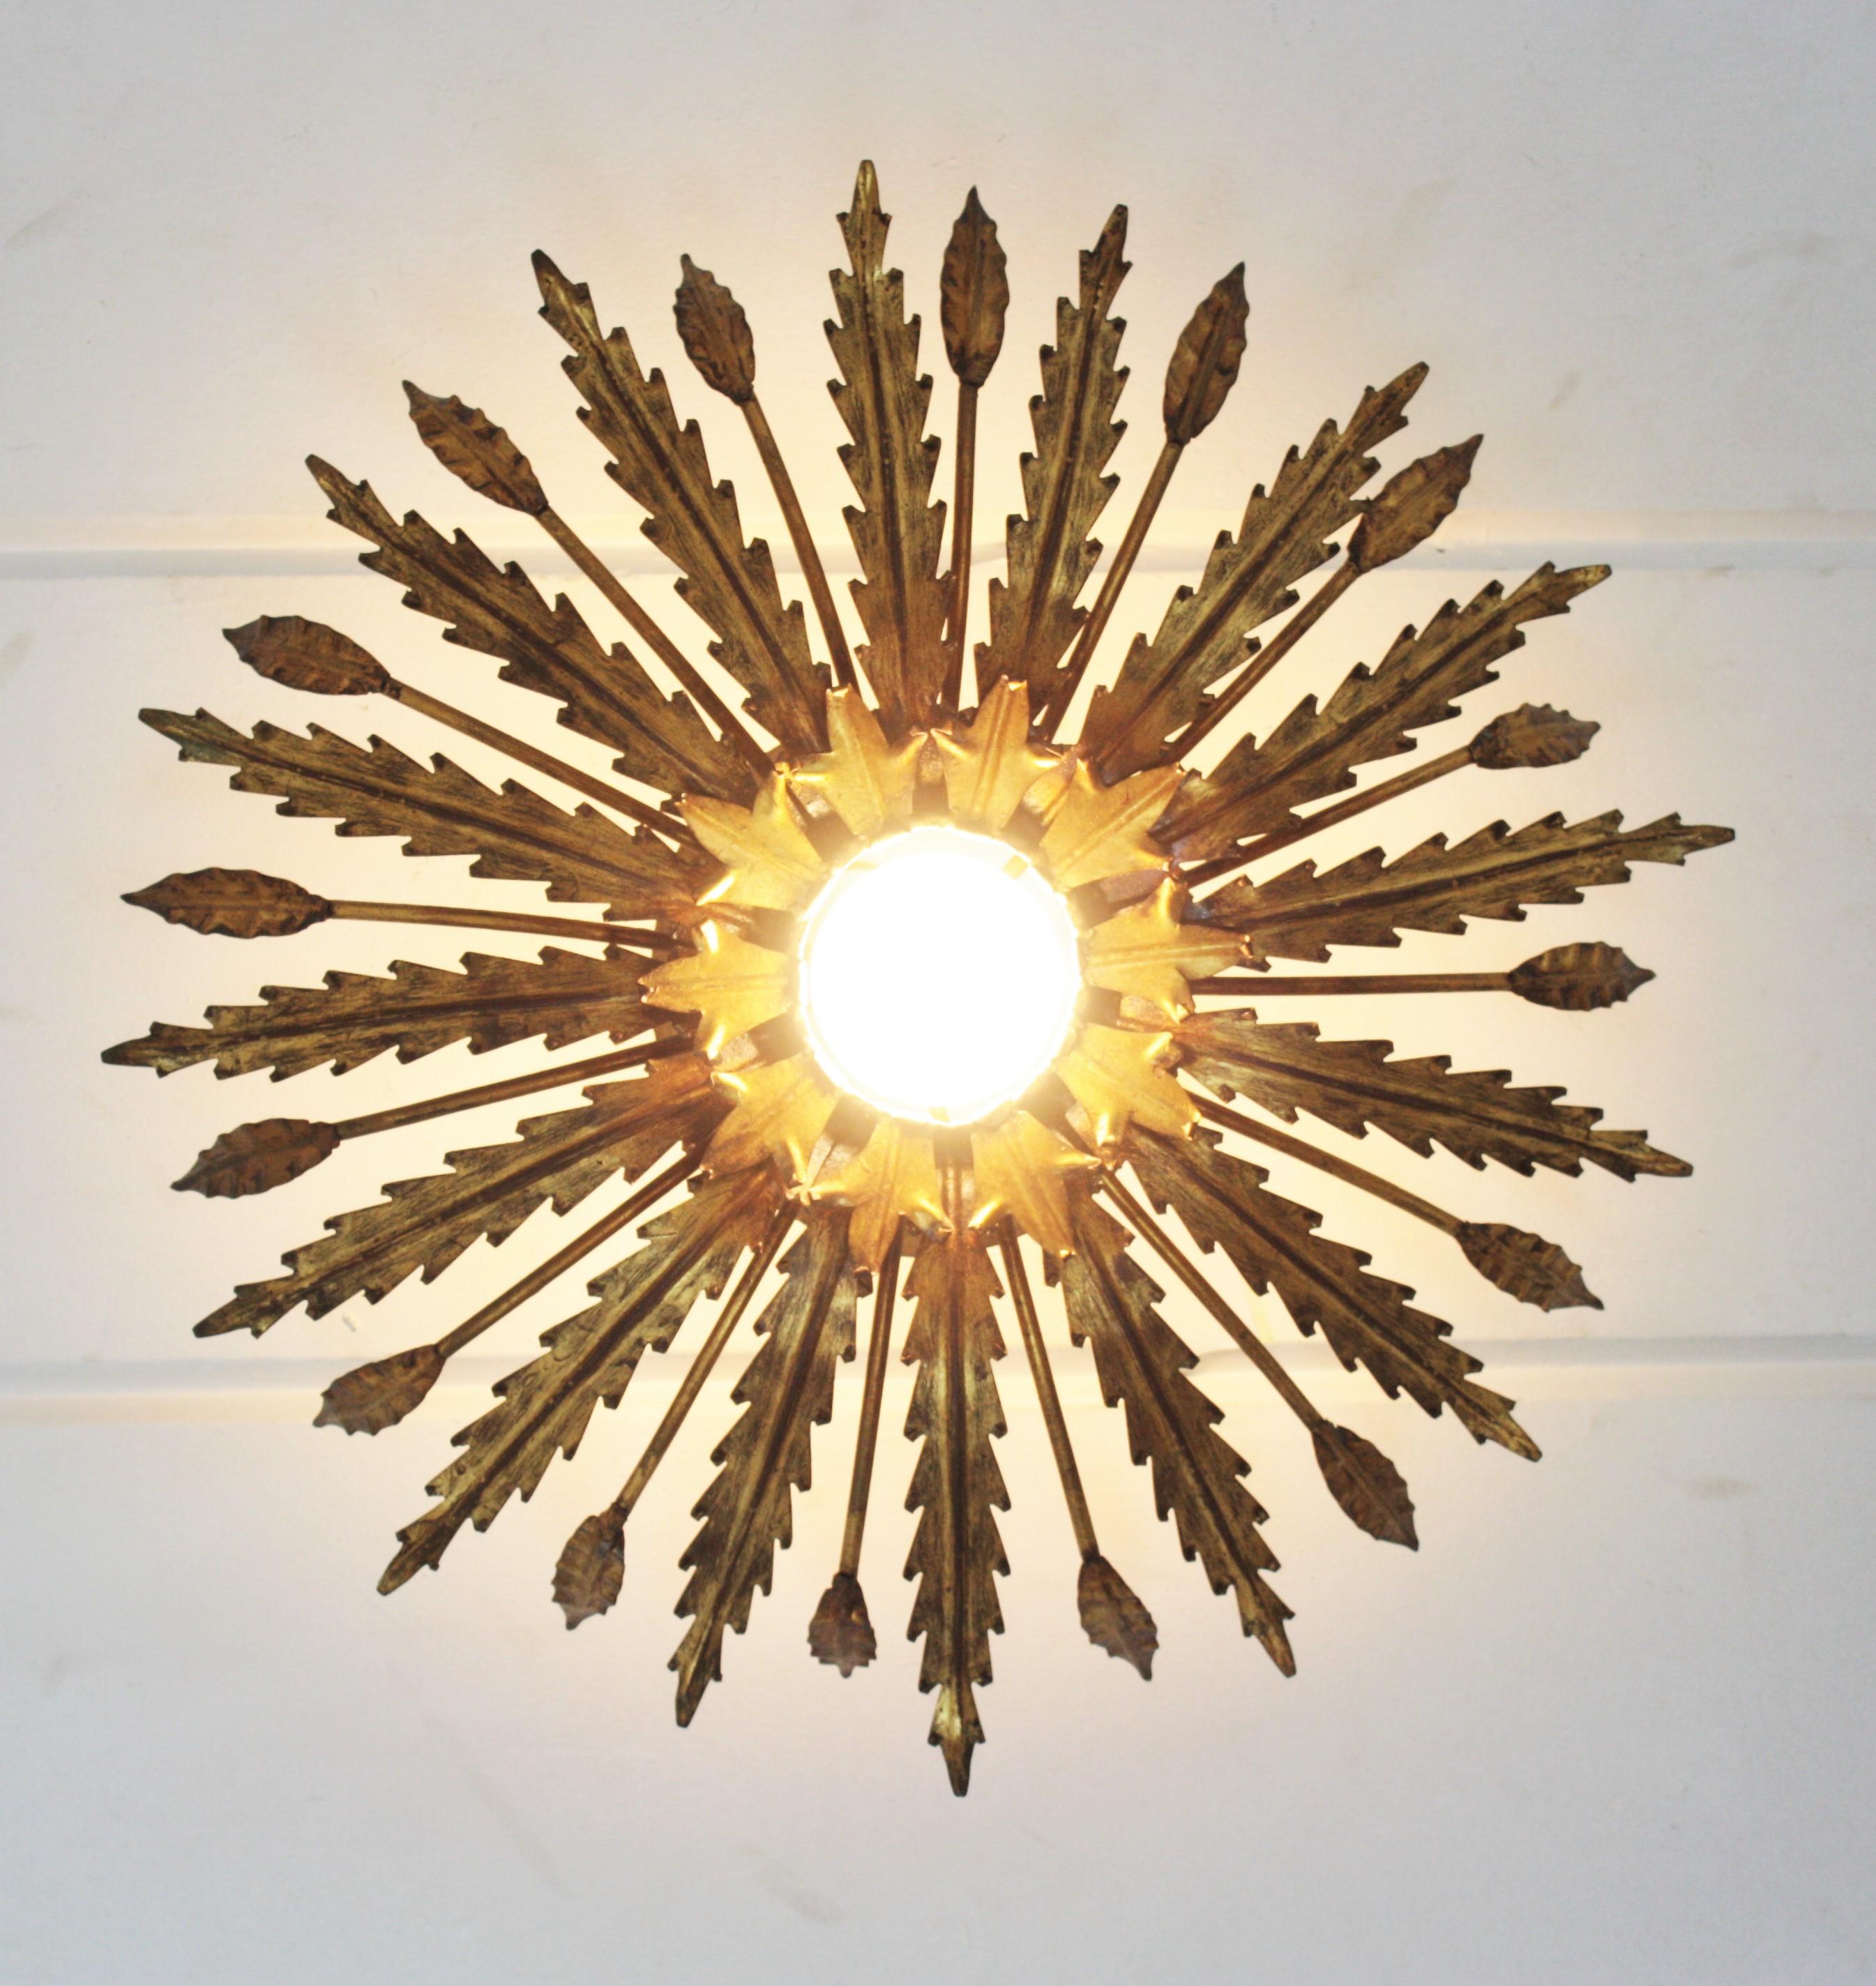 Mirror French Sunburst Light Fixture with Leaves Design, Gilt Iron